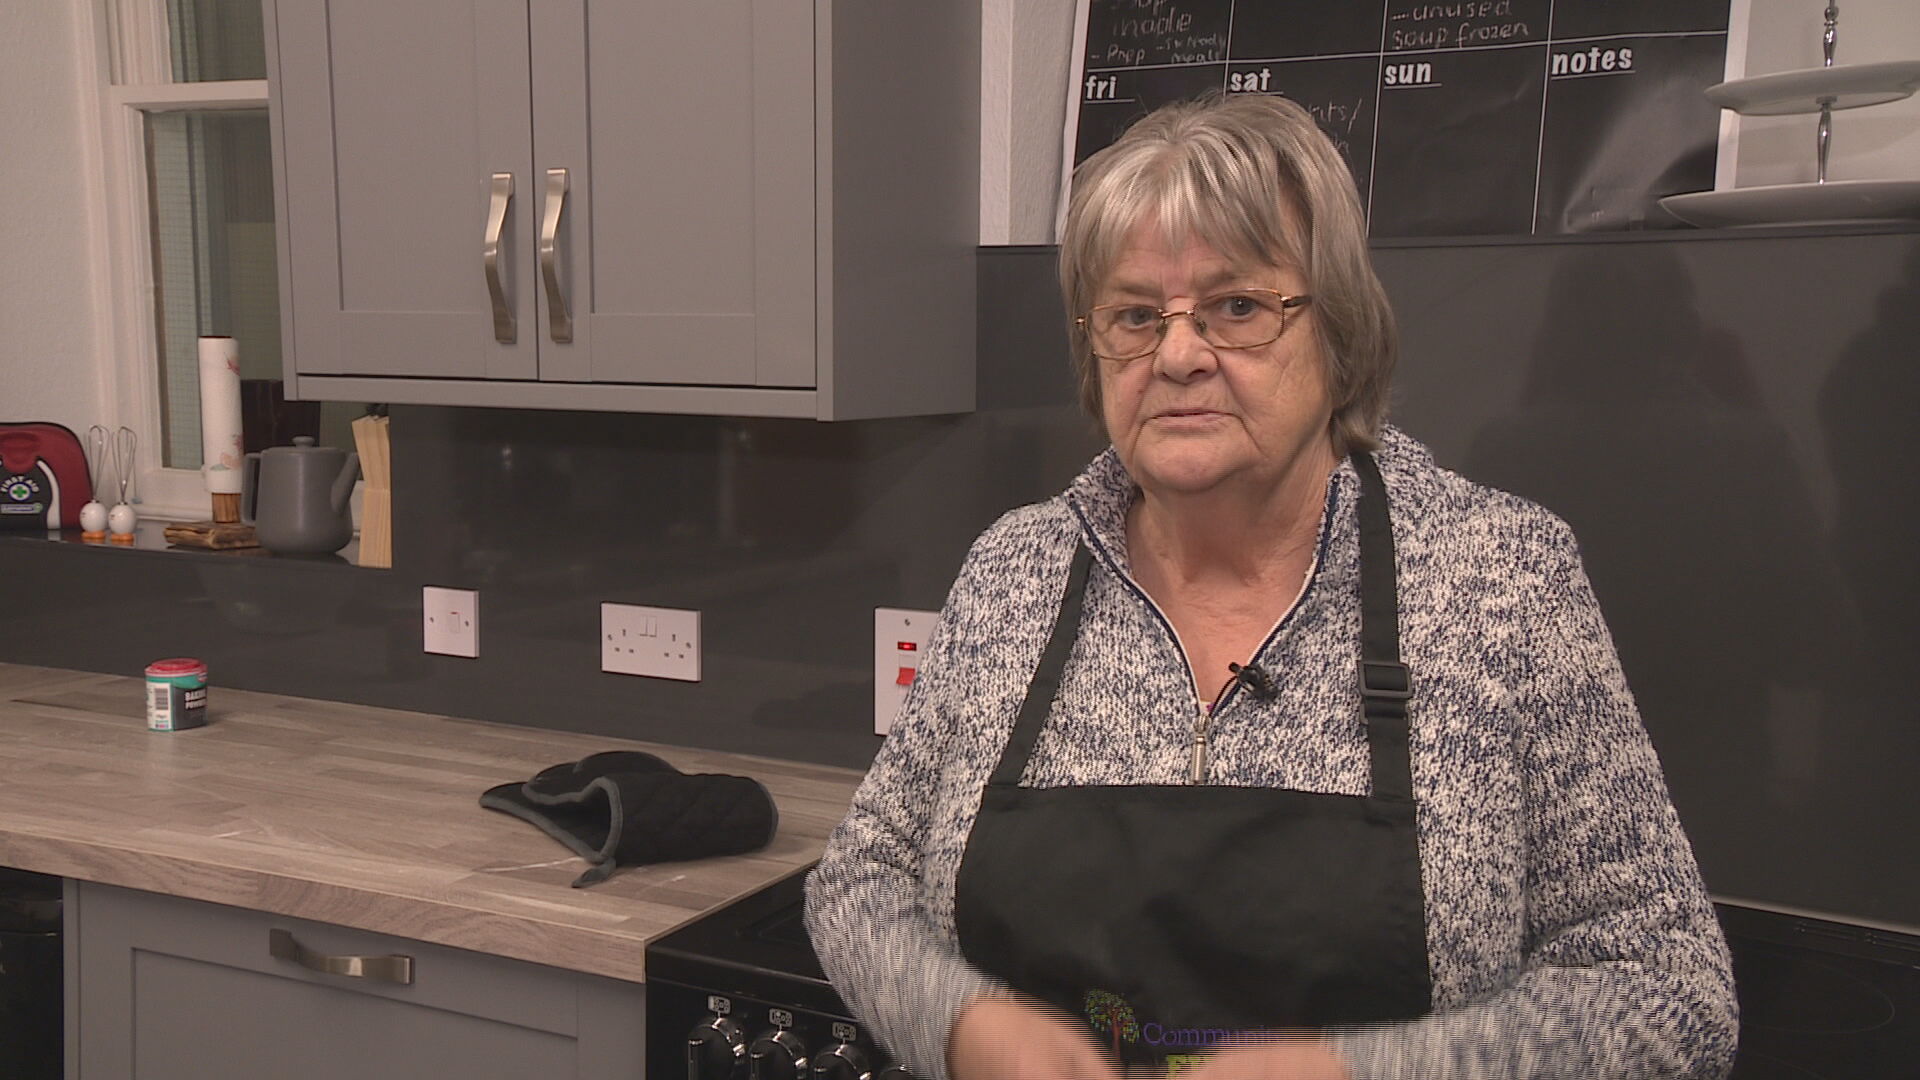 Margaret Kydd runs cooking classes in Forfar.